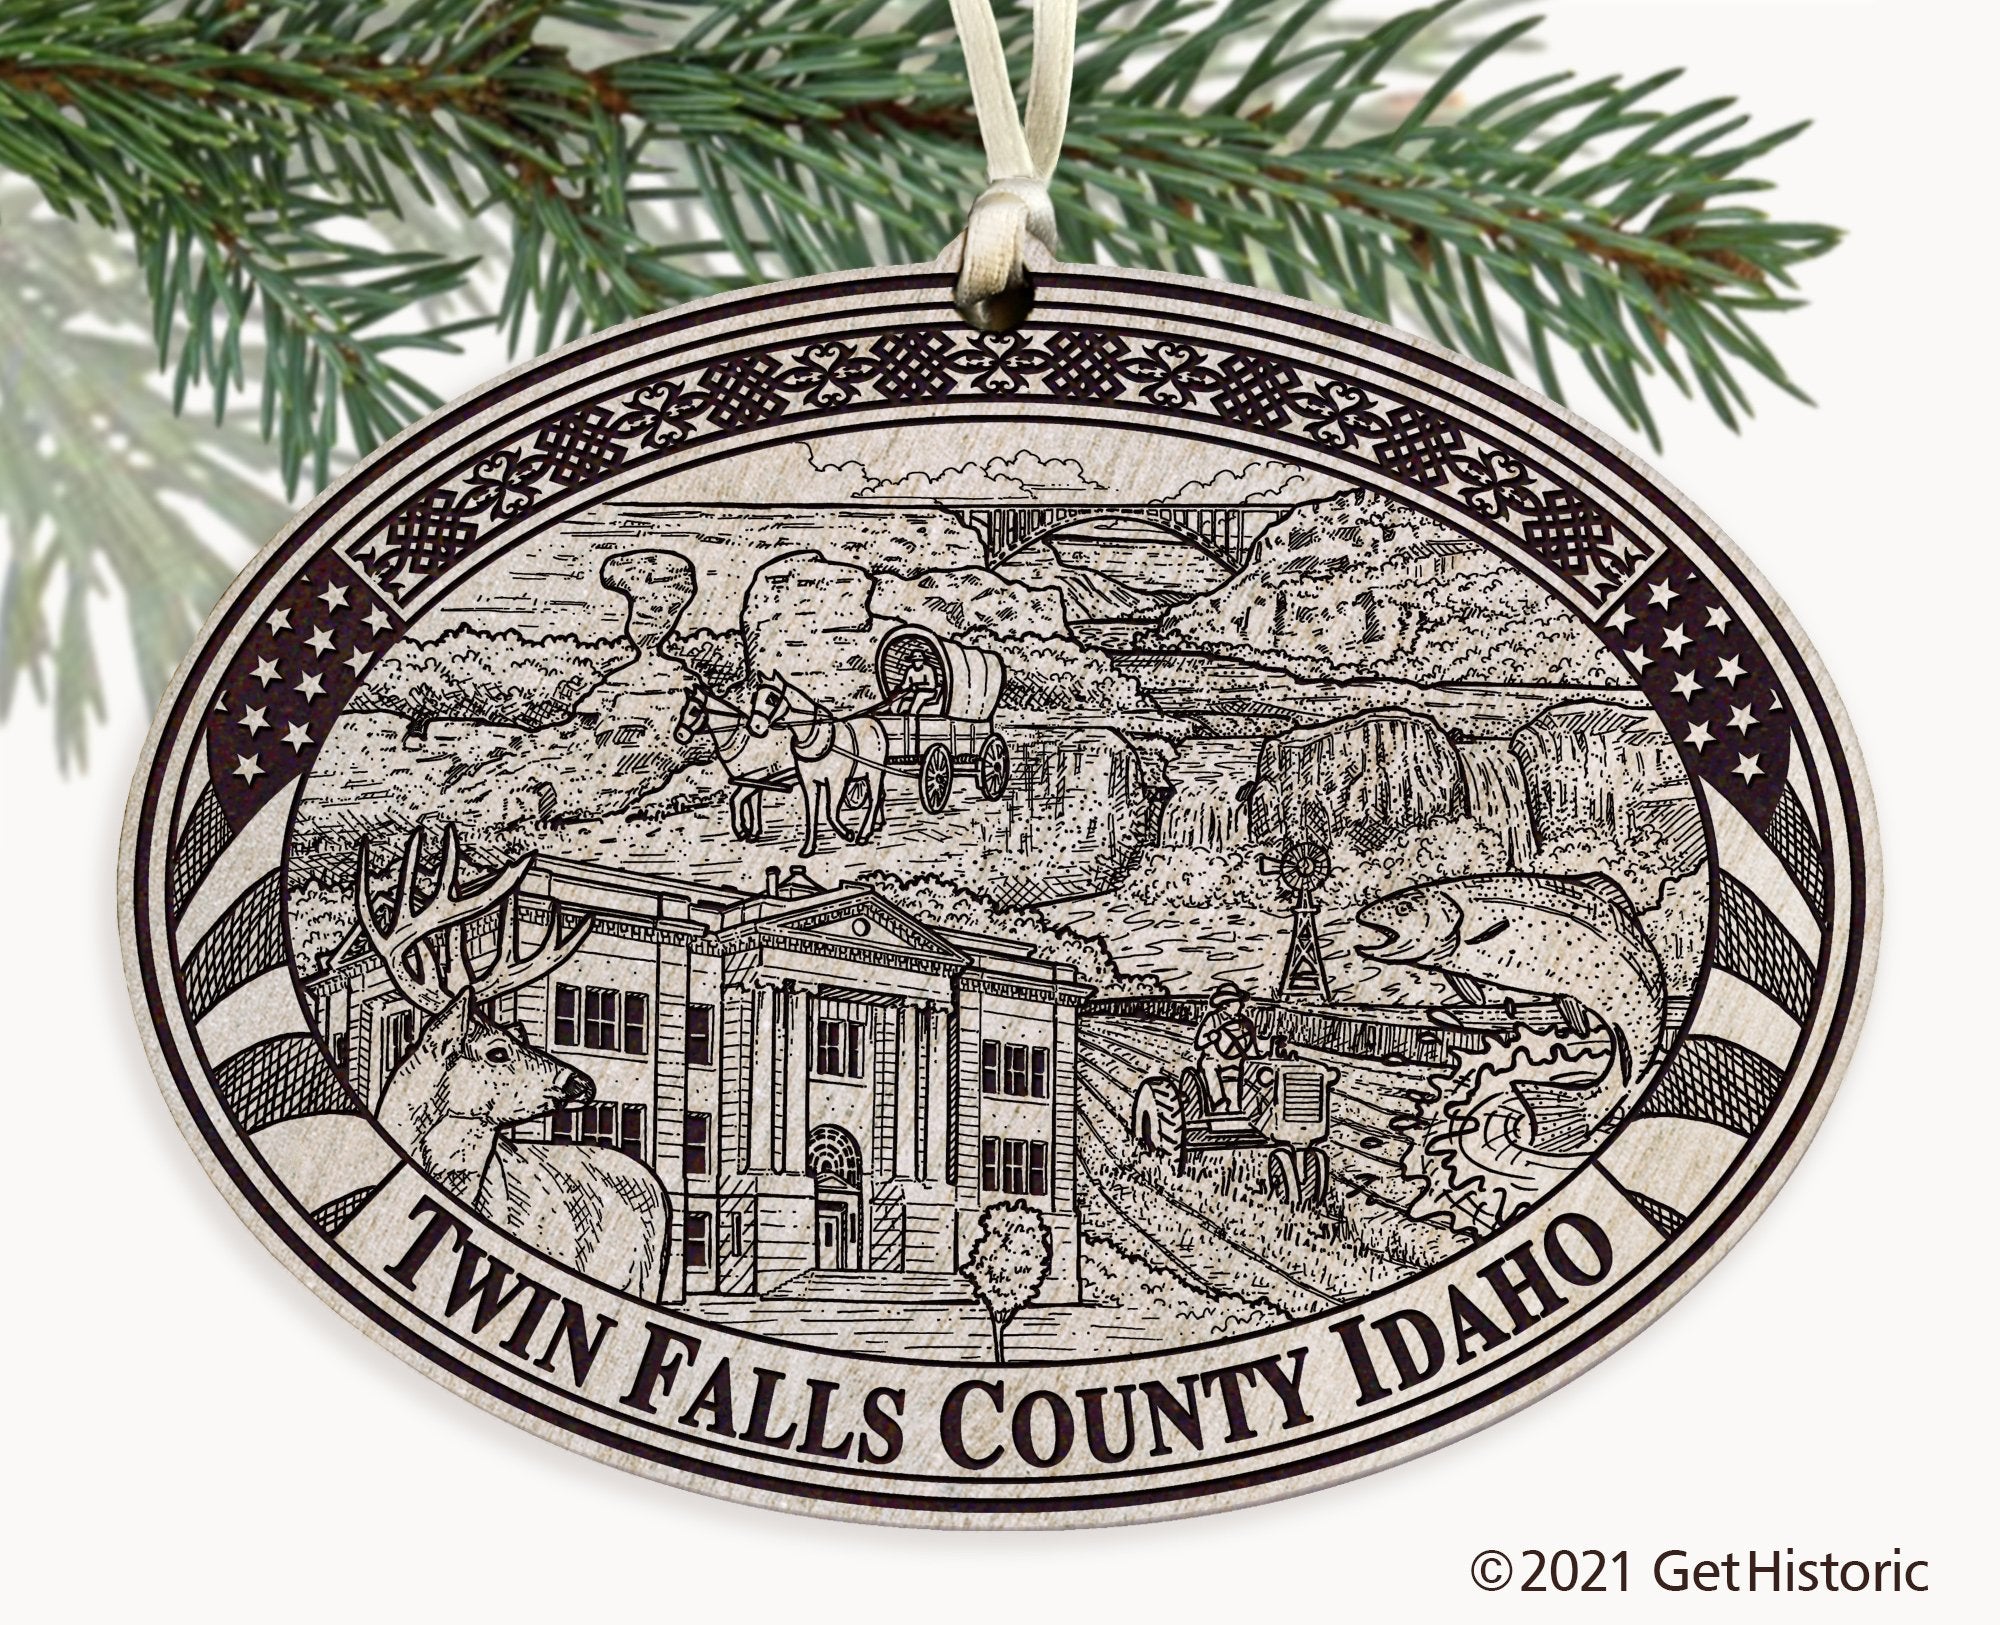 Twin Falls County Idaho Engraved Ornament